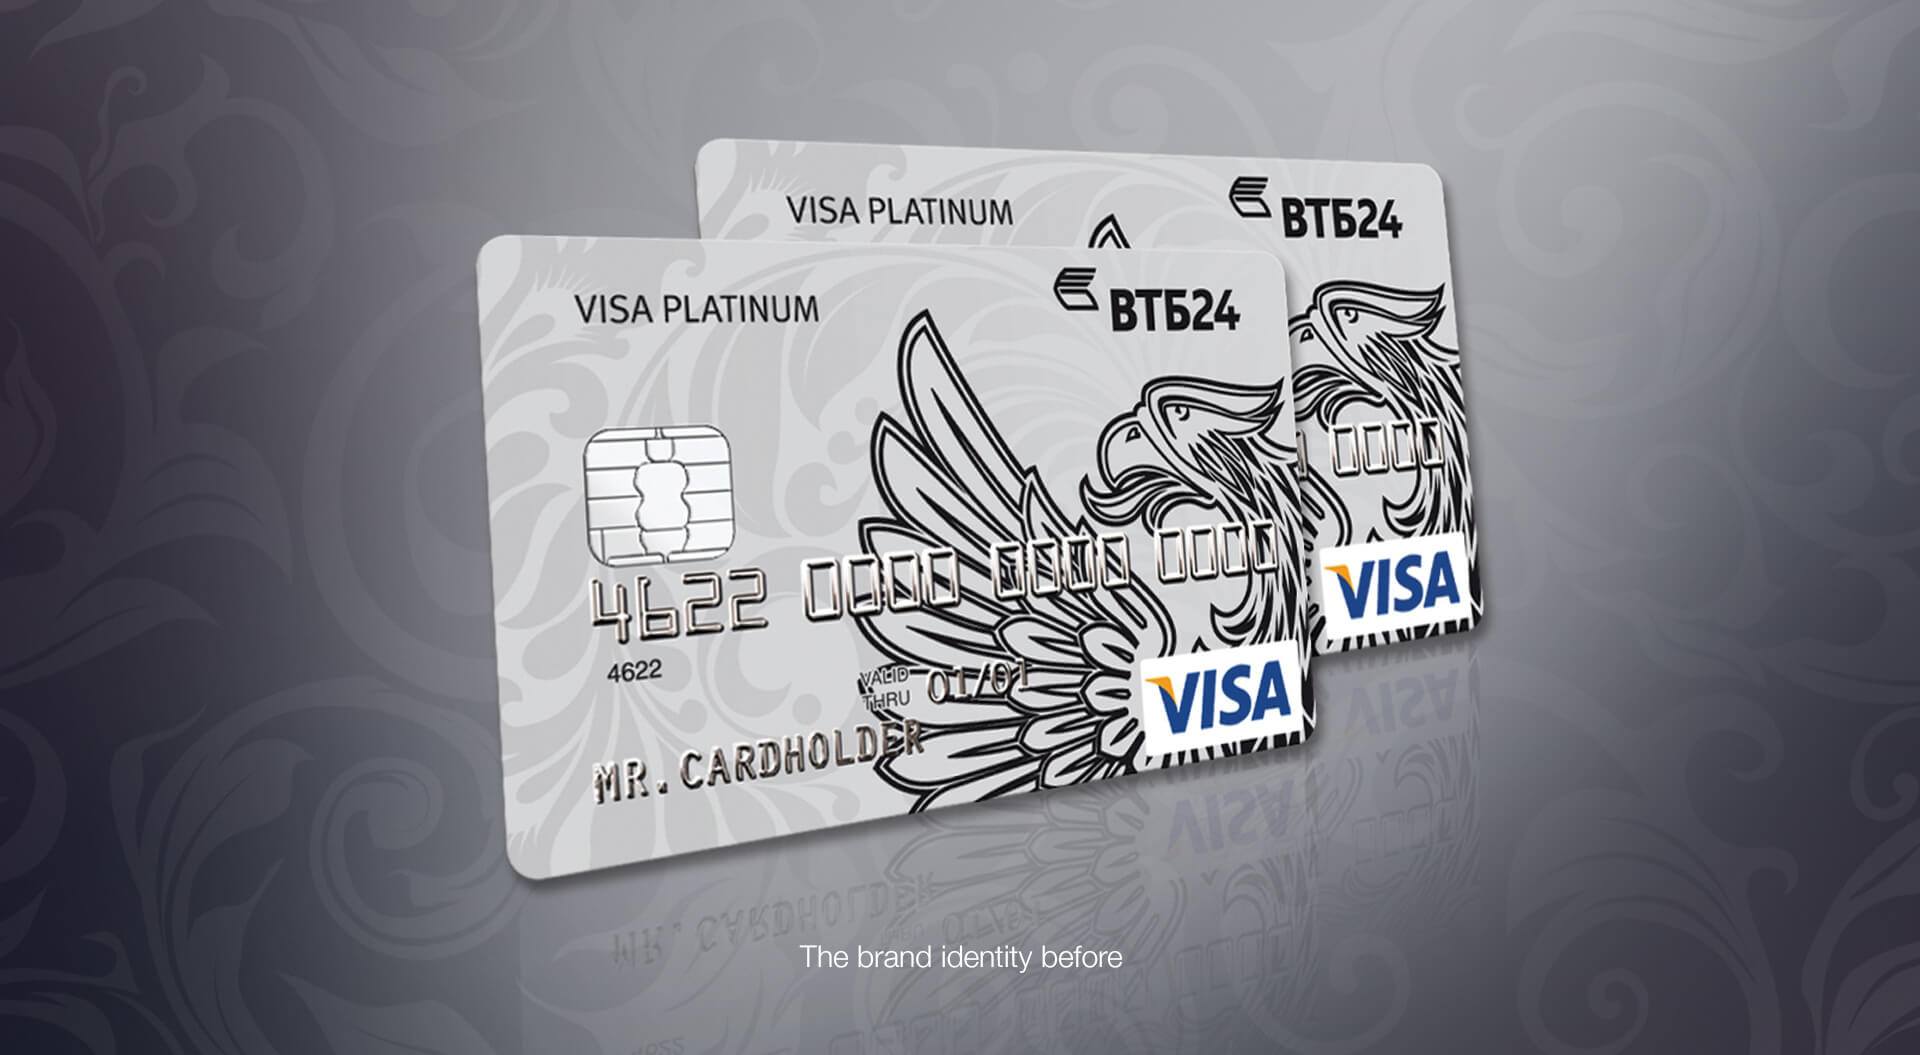 VTB24 Privilege card brand identity before